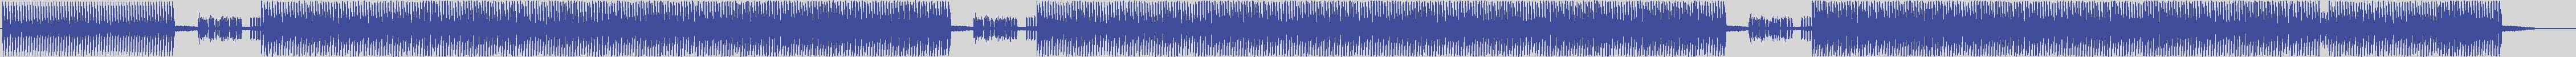 nf_boyz_records [NFY025] Coocone - Me [Tronik Mix] audio wave form